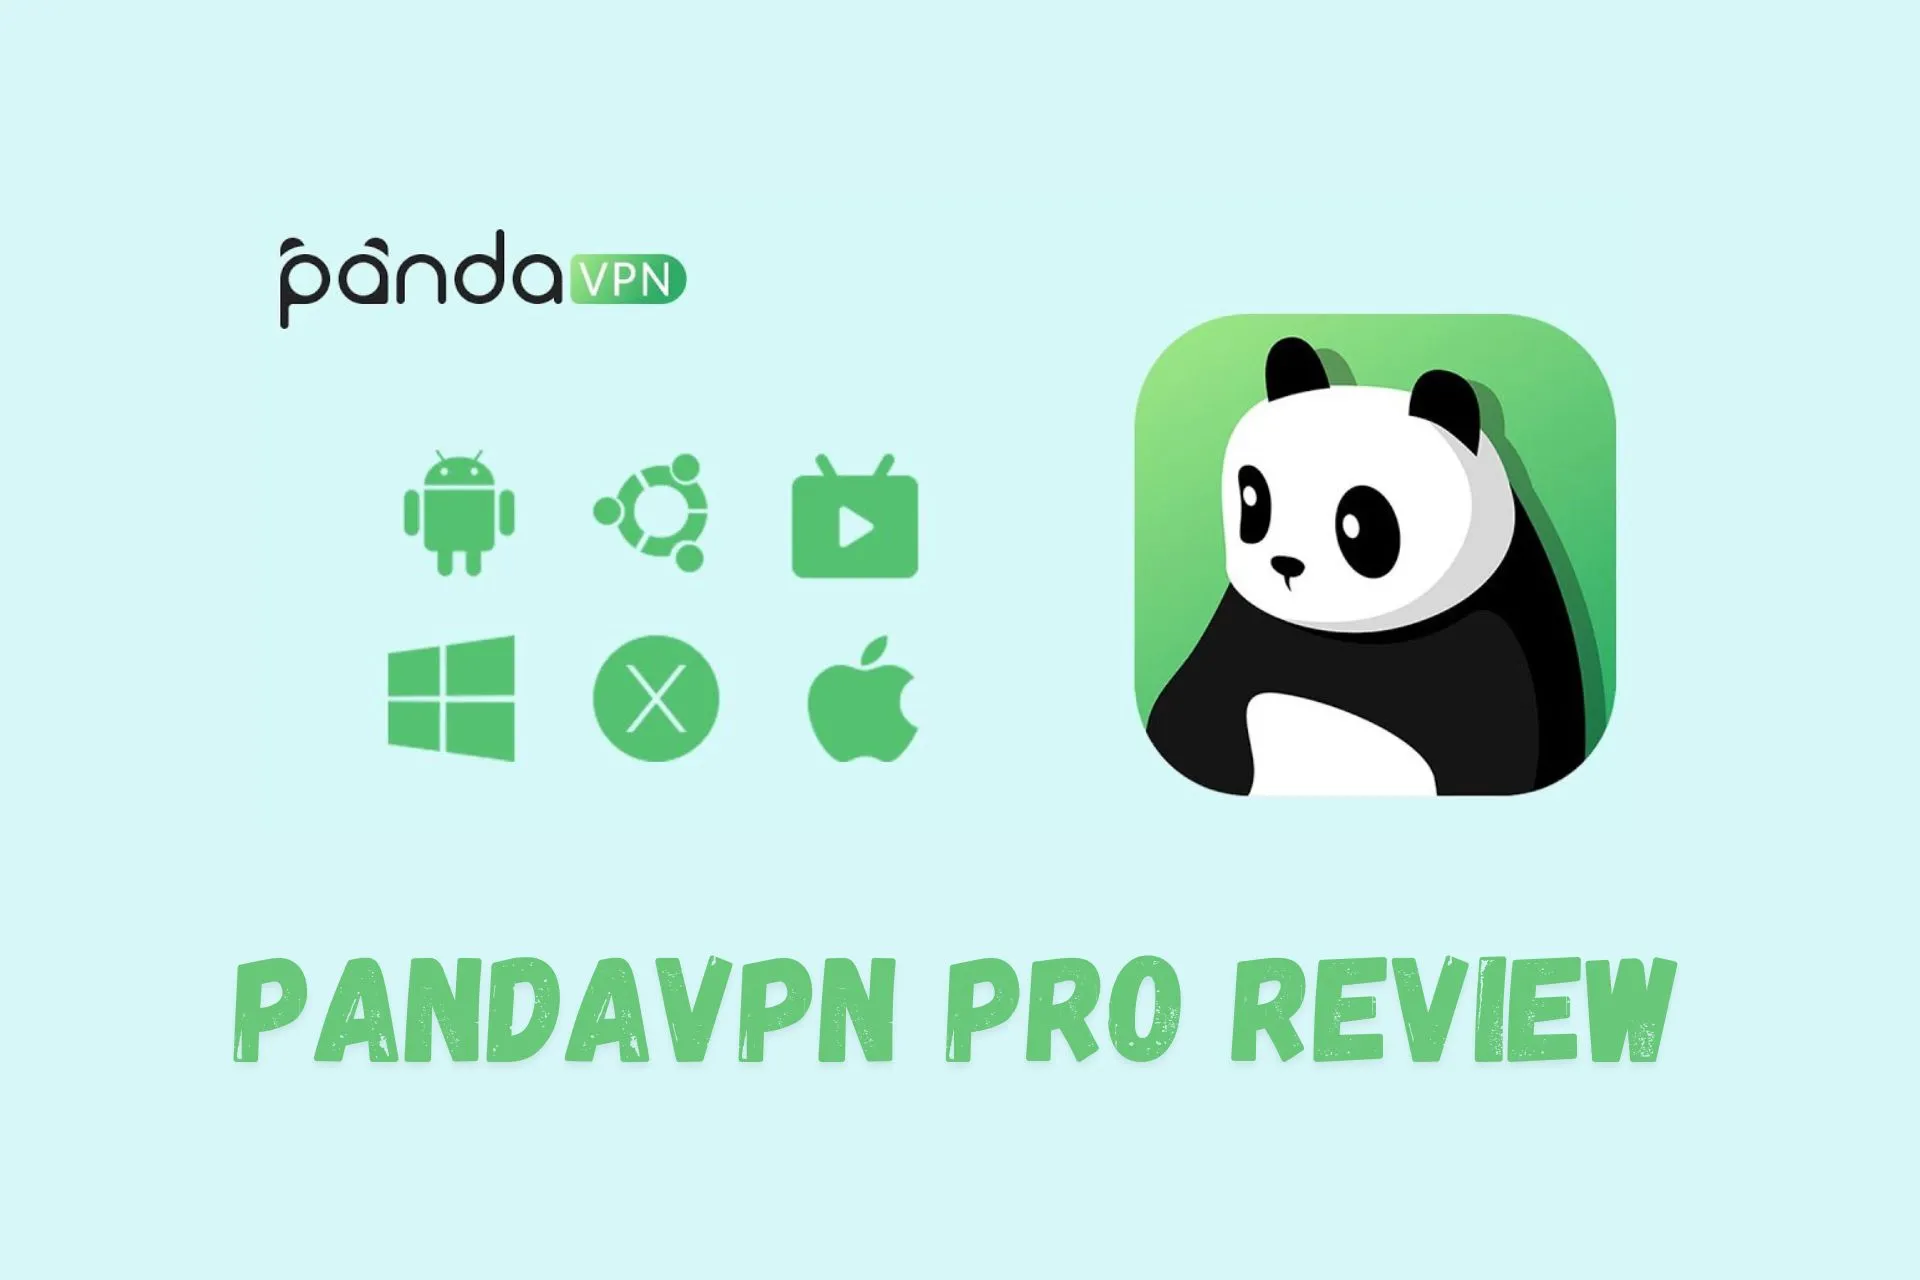 pandavpn pro review